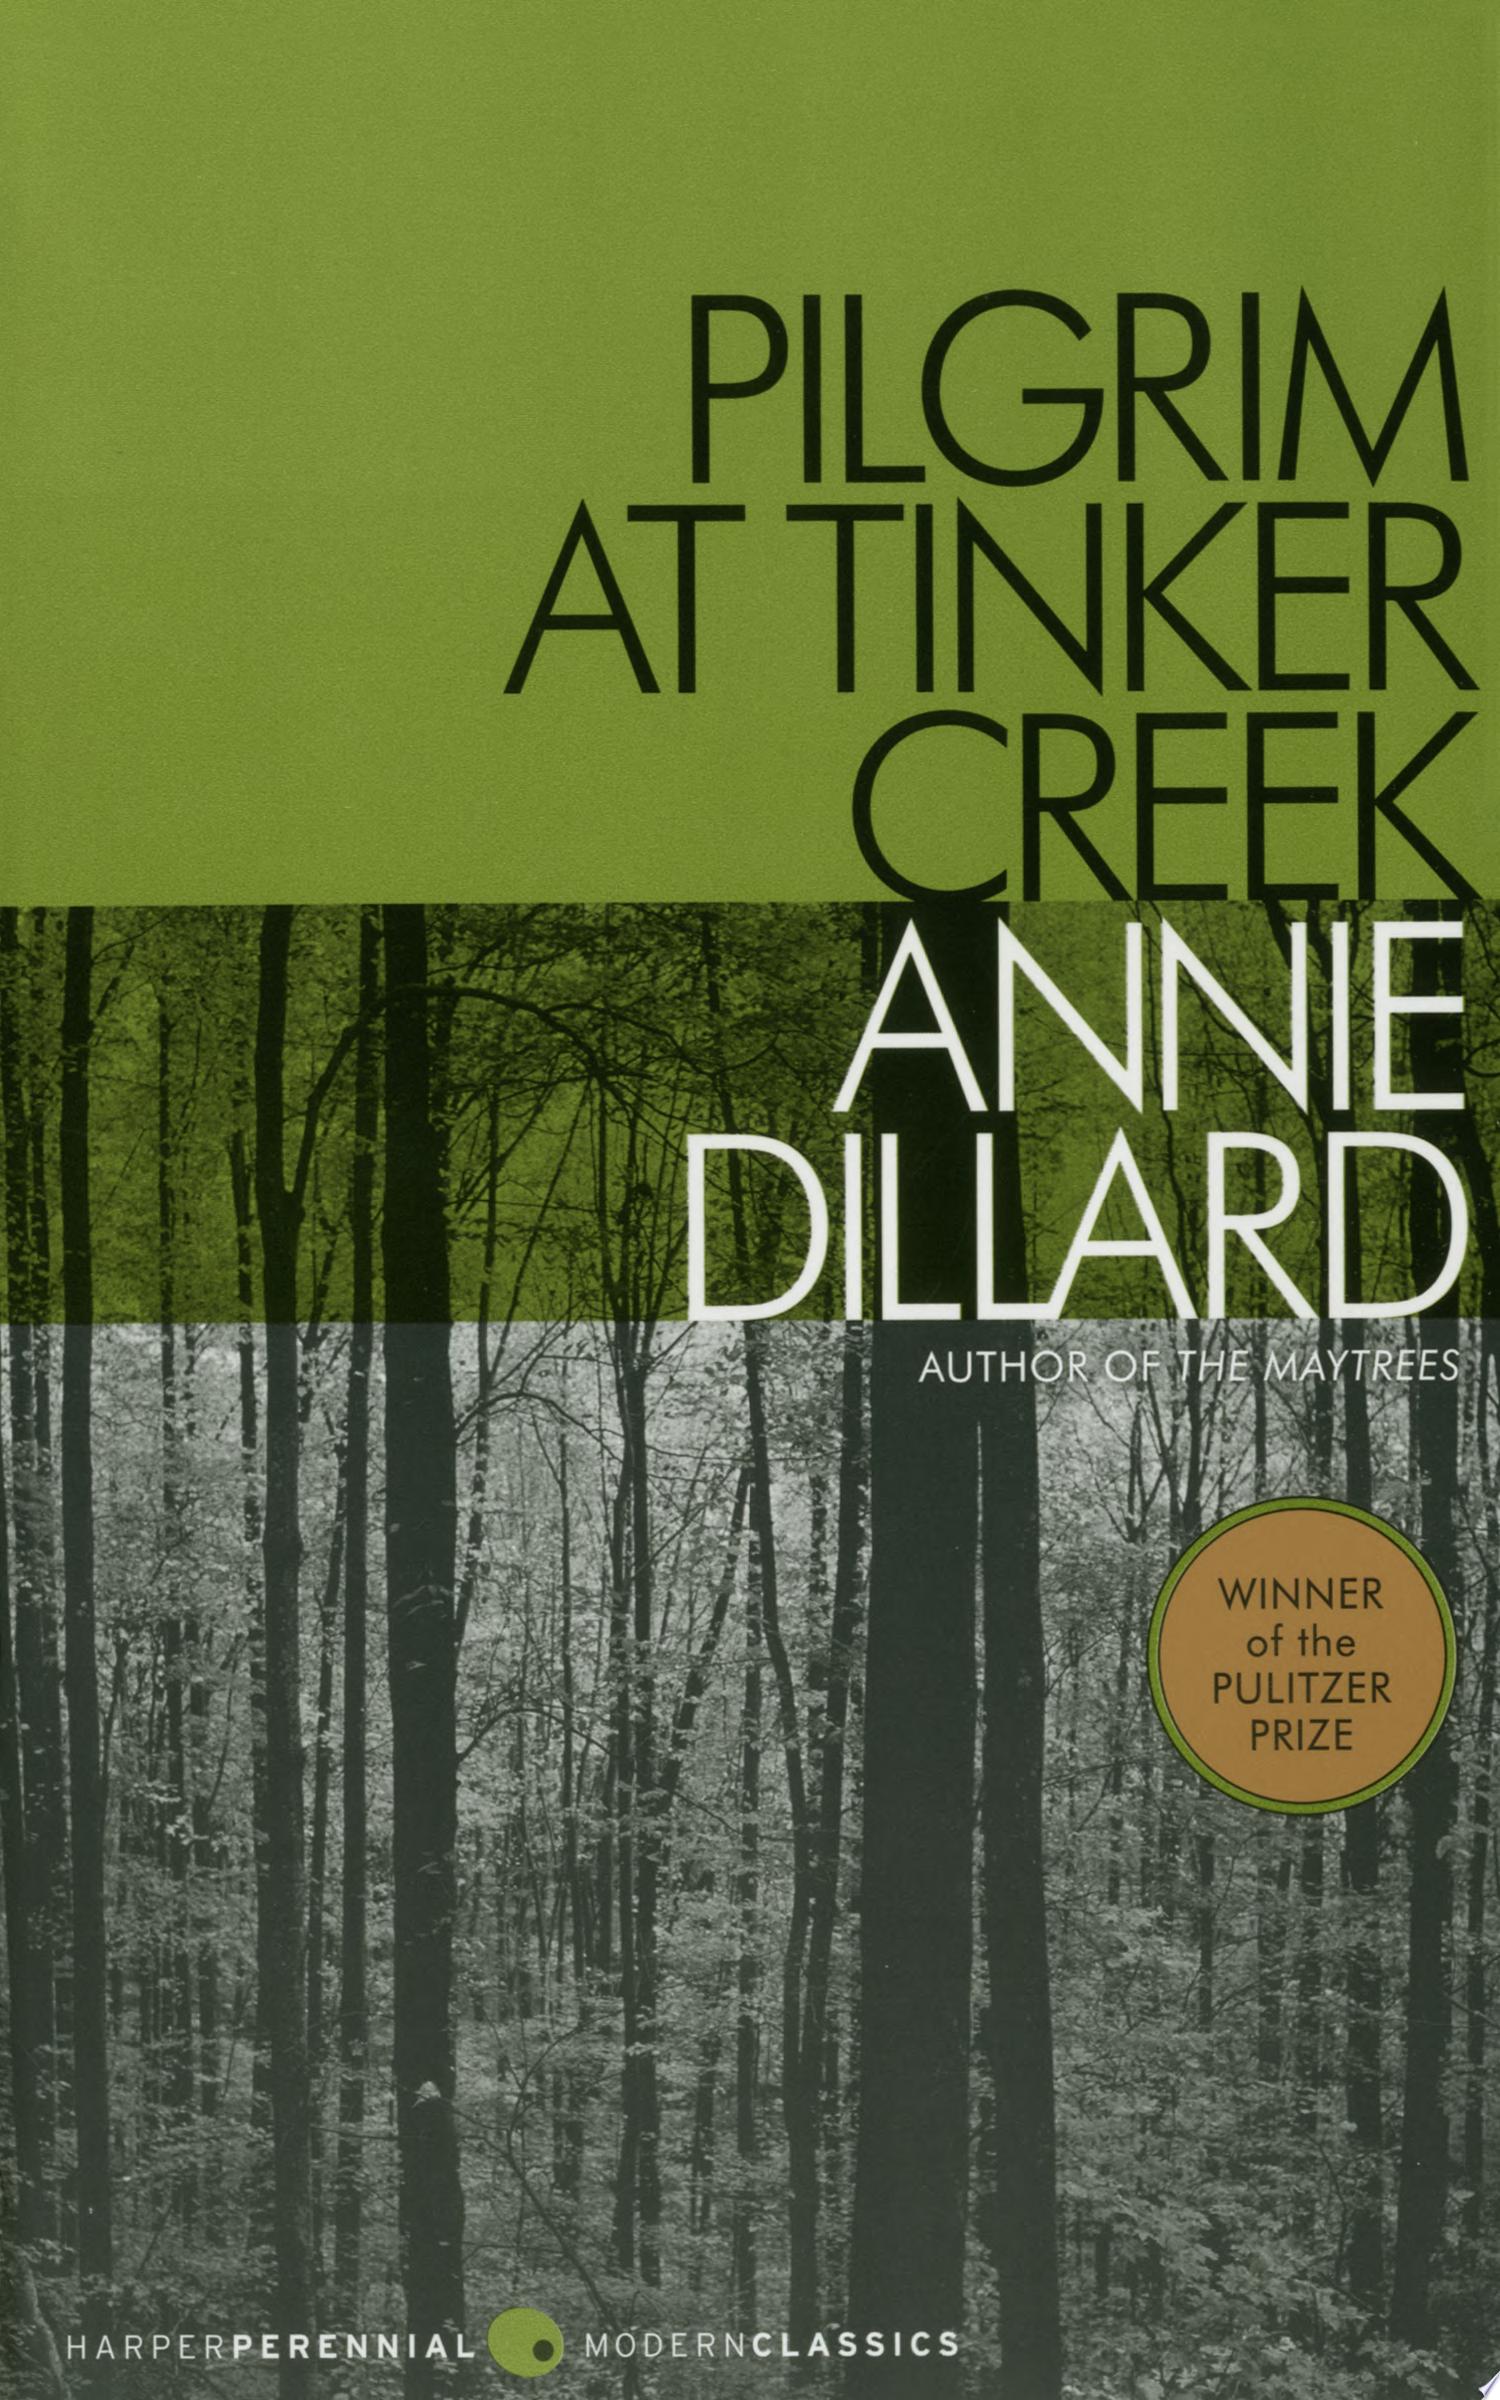 Image for "Pilgrim at Tinker Creek"